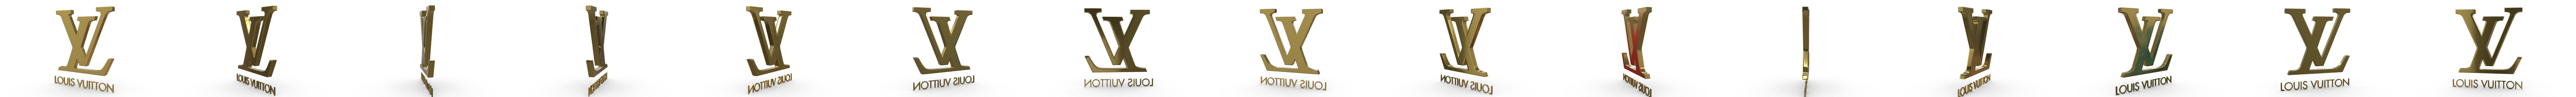 Louis Vuitton Logo v2 005 free VR / AR / low-poly 3D model